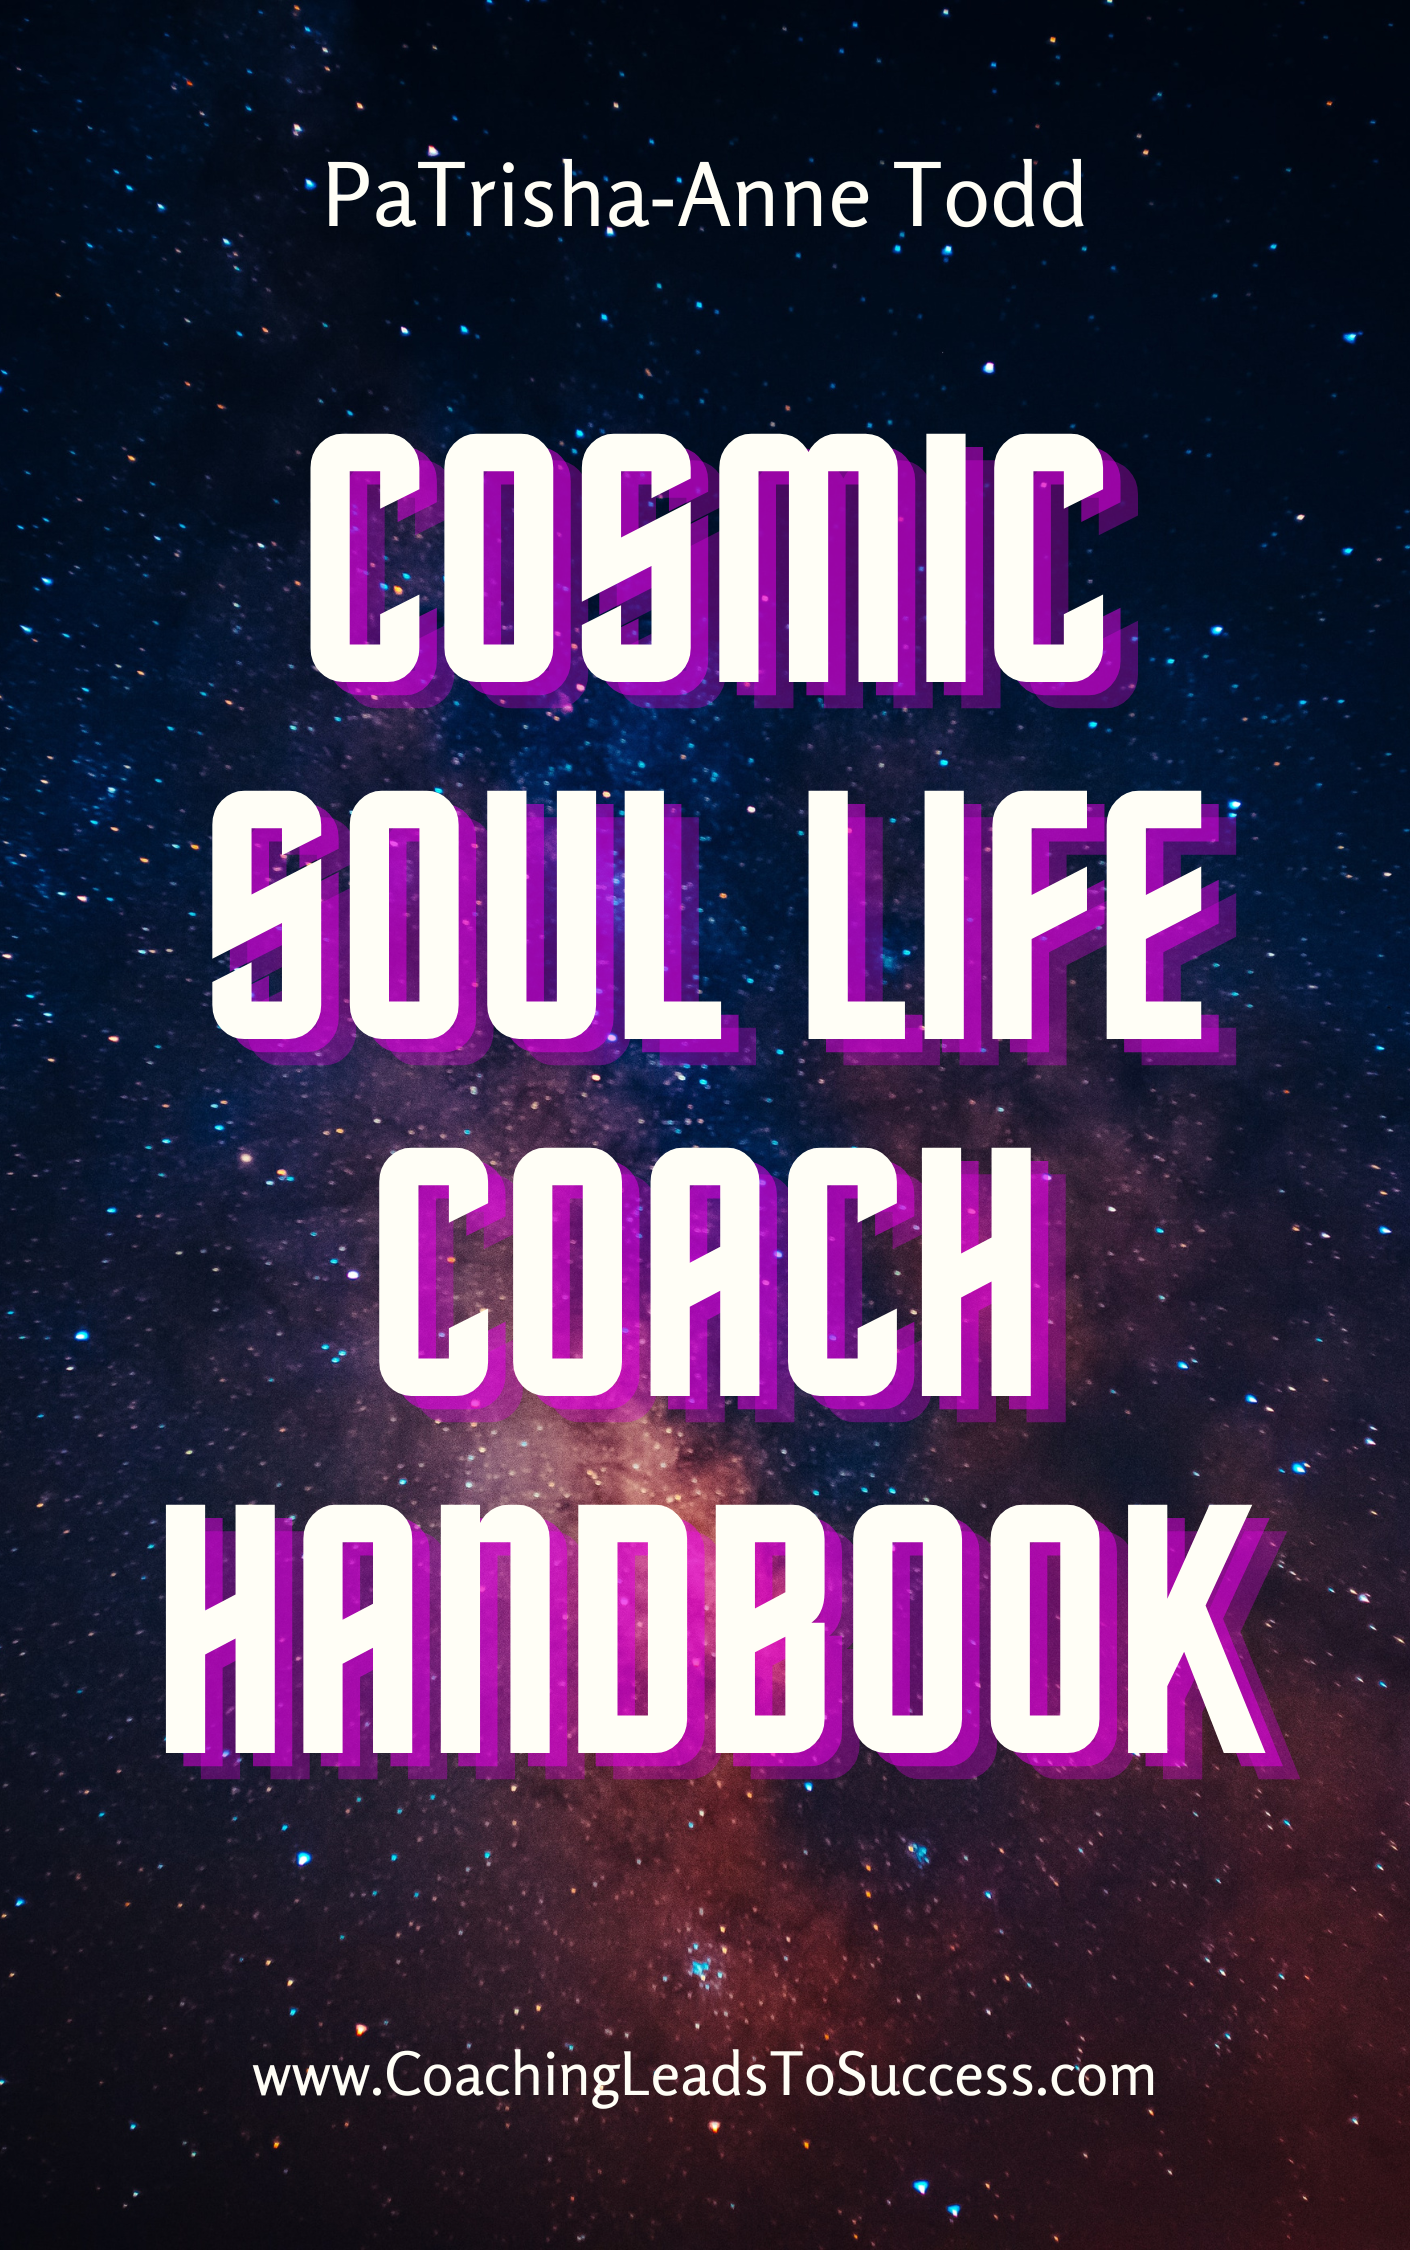 Cosmic Soul Life Coach
Patrisha-Anne Todd
Coaching Leads to Success